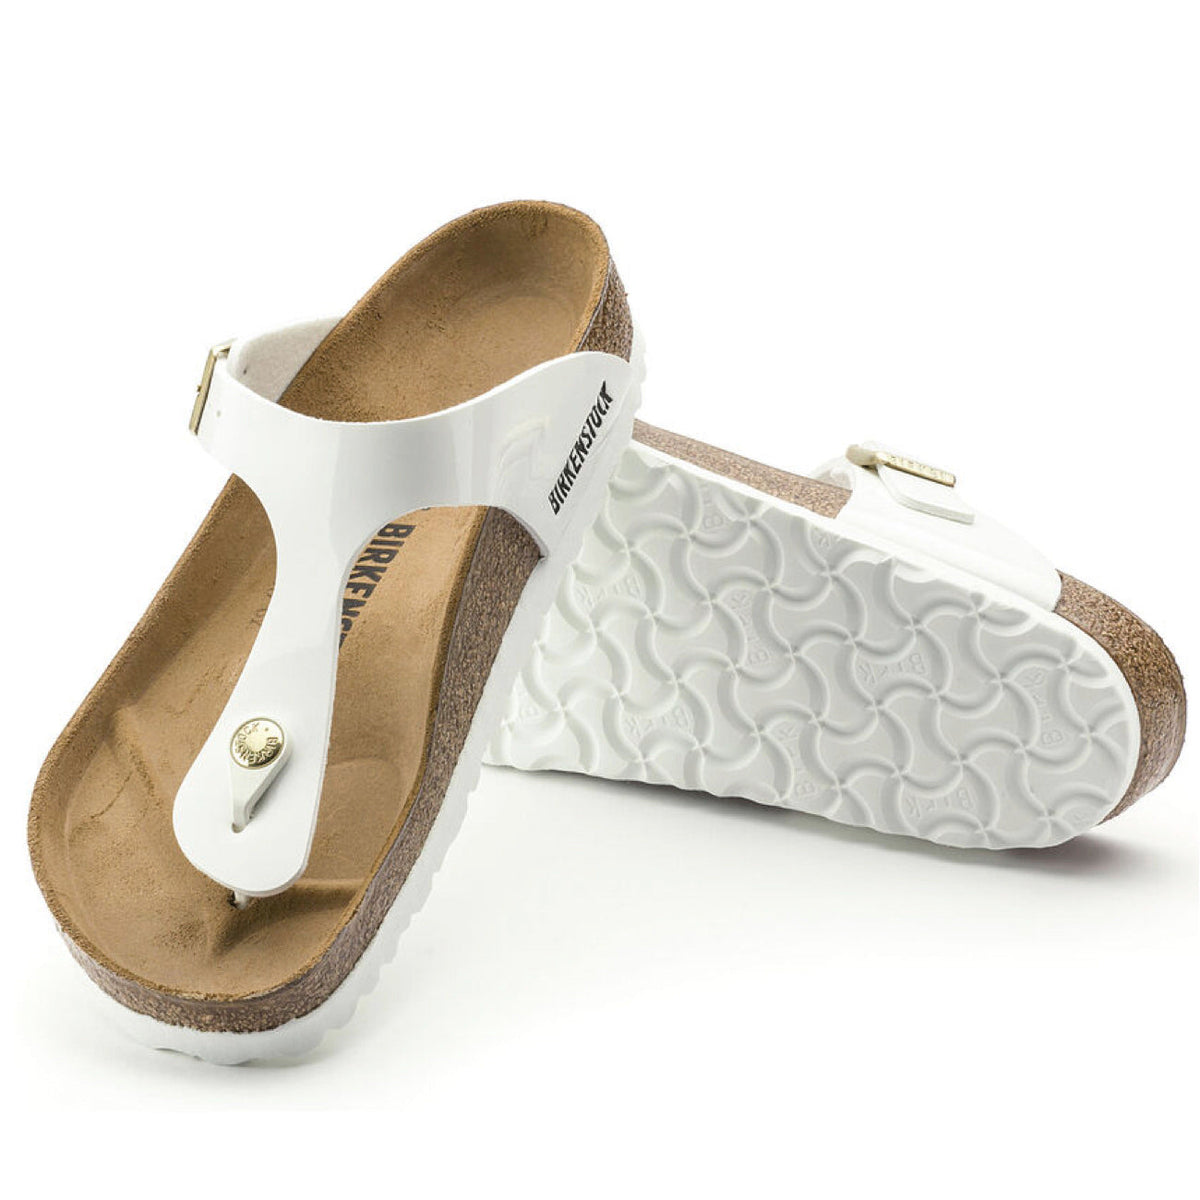 Birkenstock Classic, Gizeh, Birko-Flor Patent, Regular Fit, White Sandals Birkenstock Seasonal 